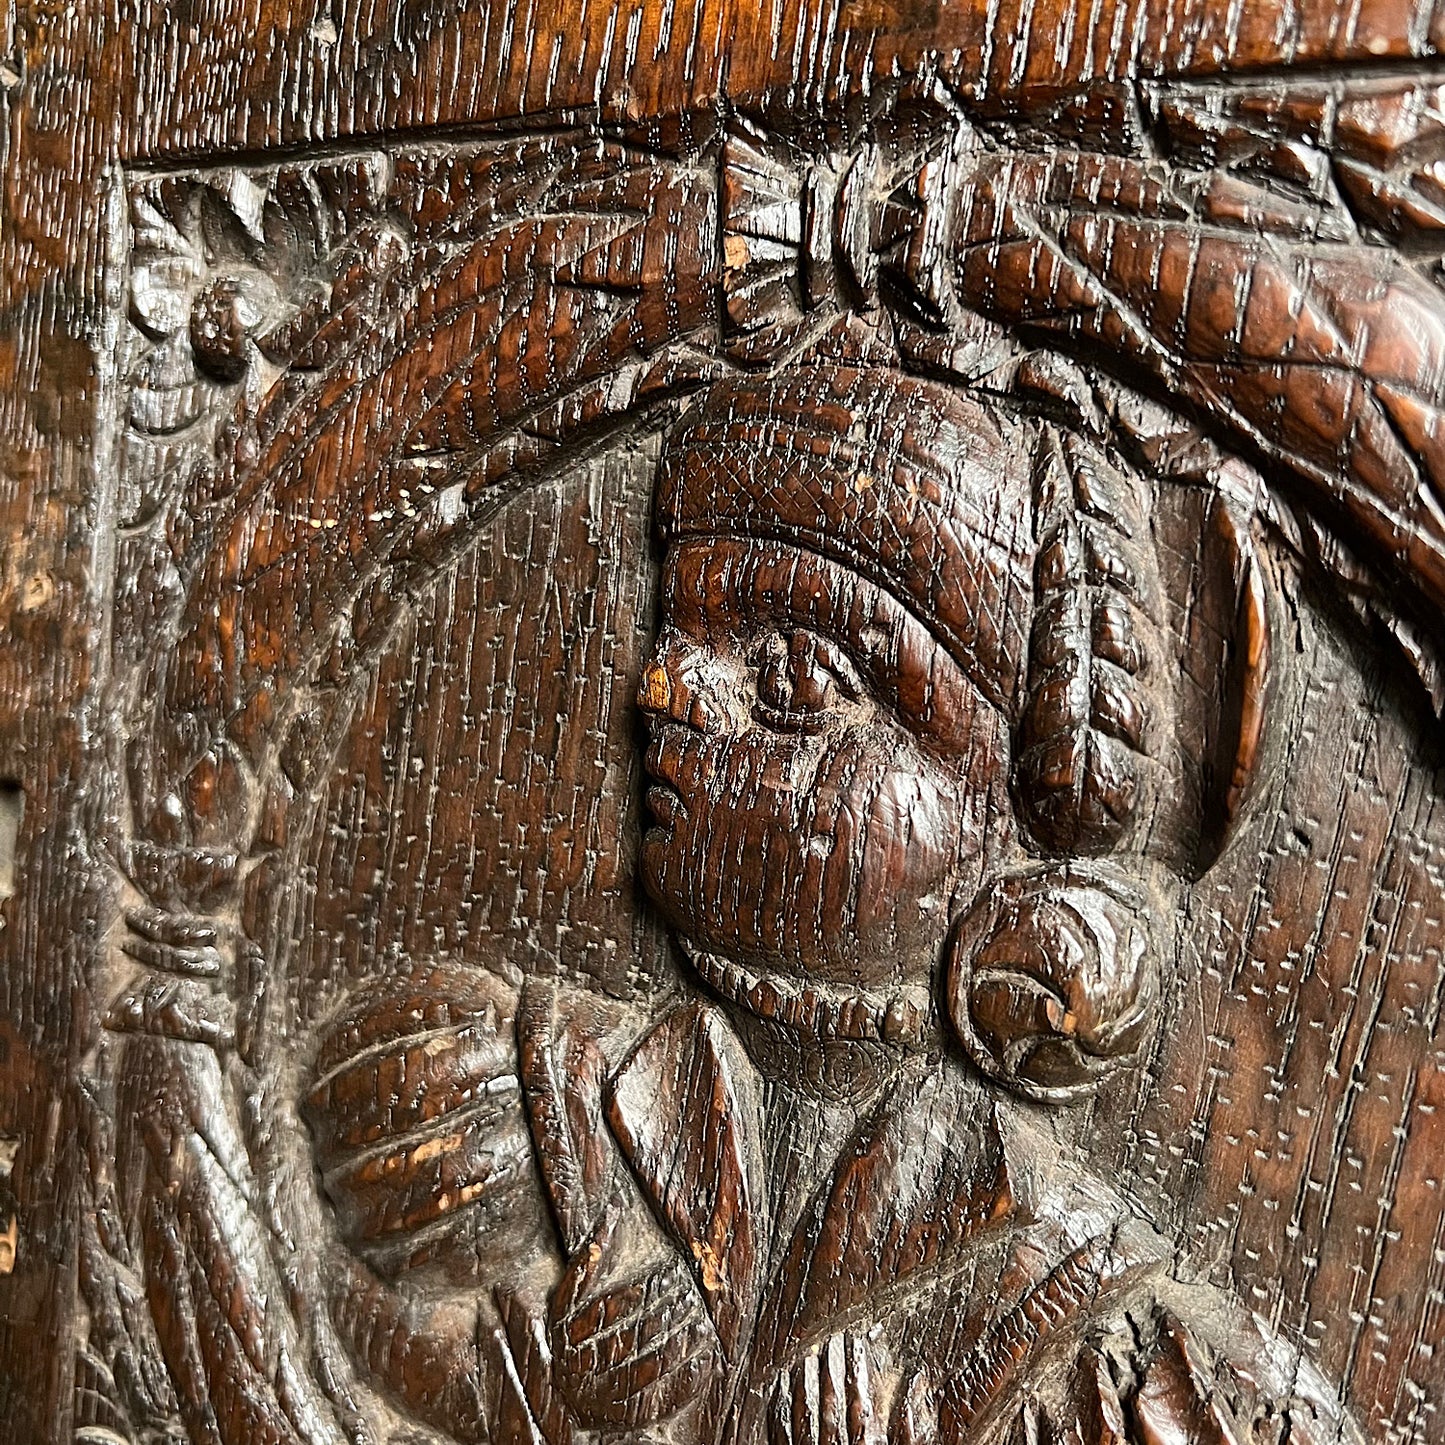 Carved Oak Slab Panel with Romayne Portrait c.1550